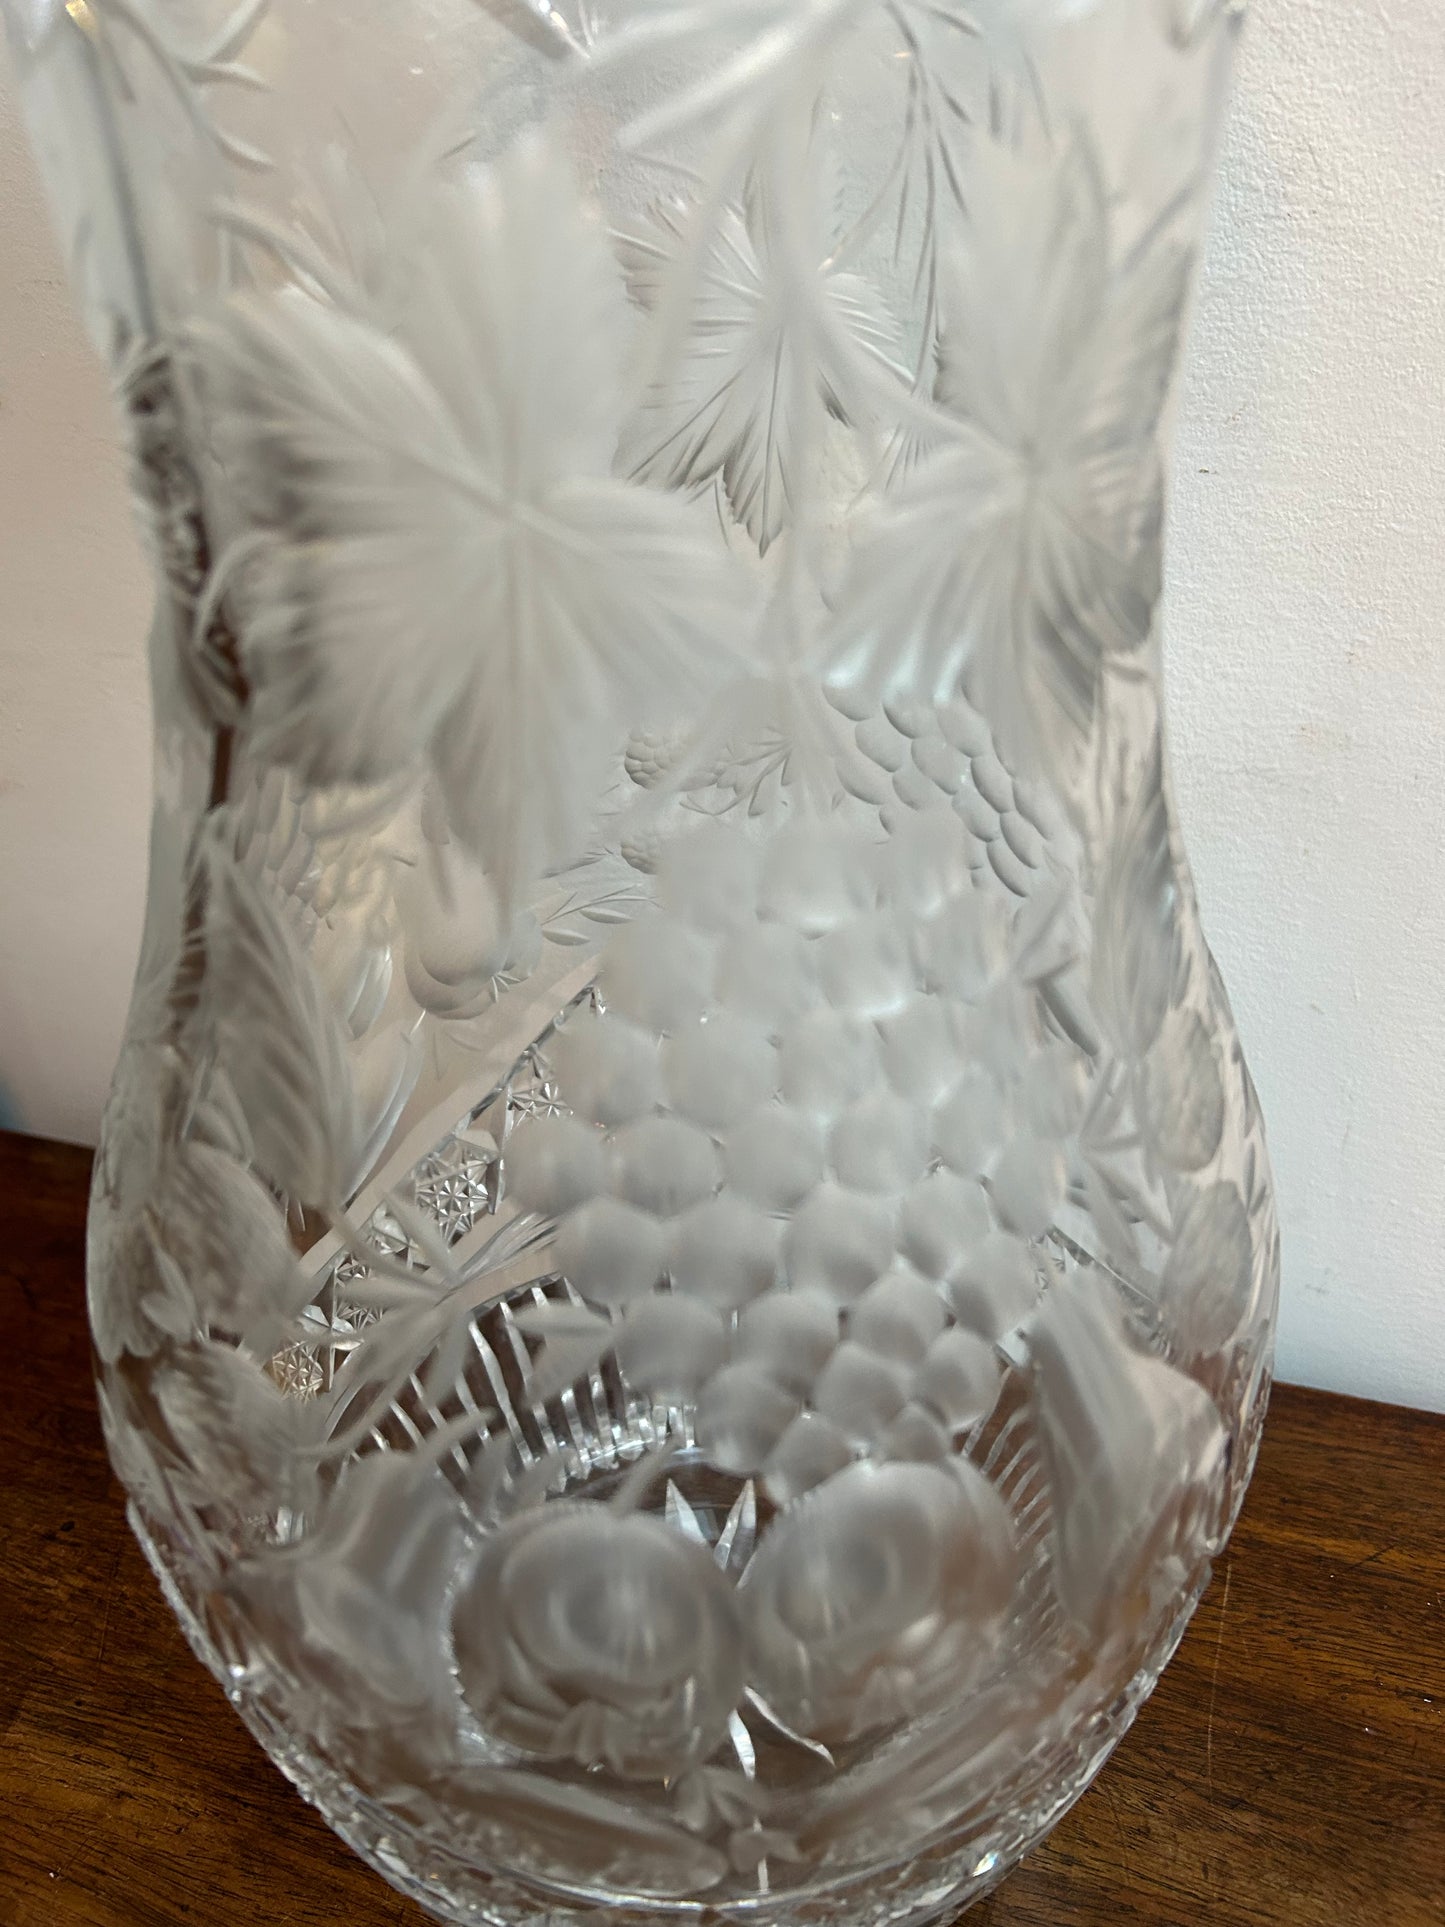 Victorian Cut Glass Vase